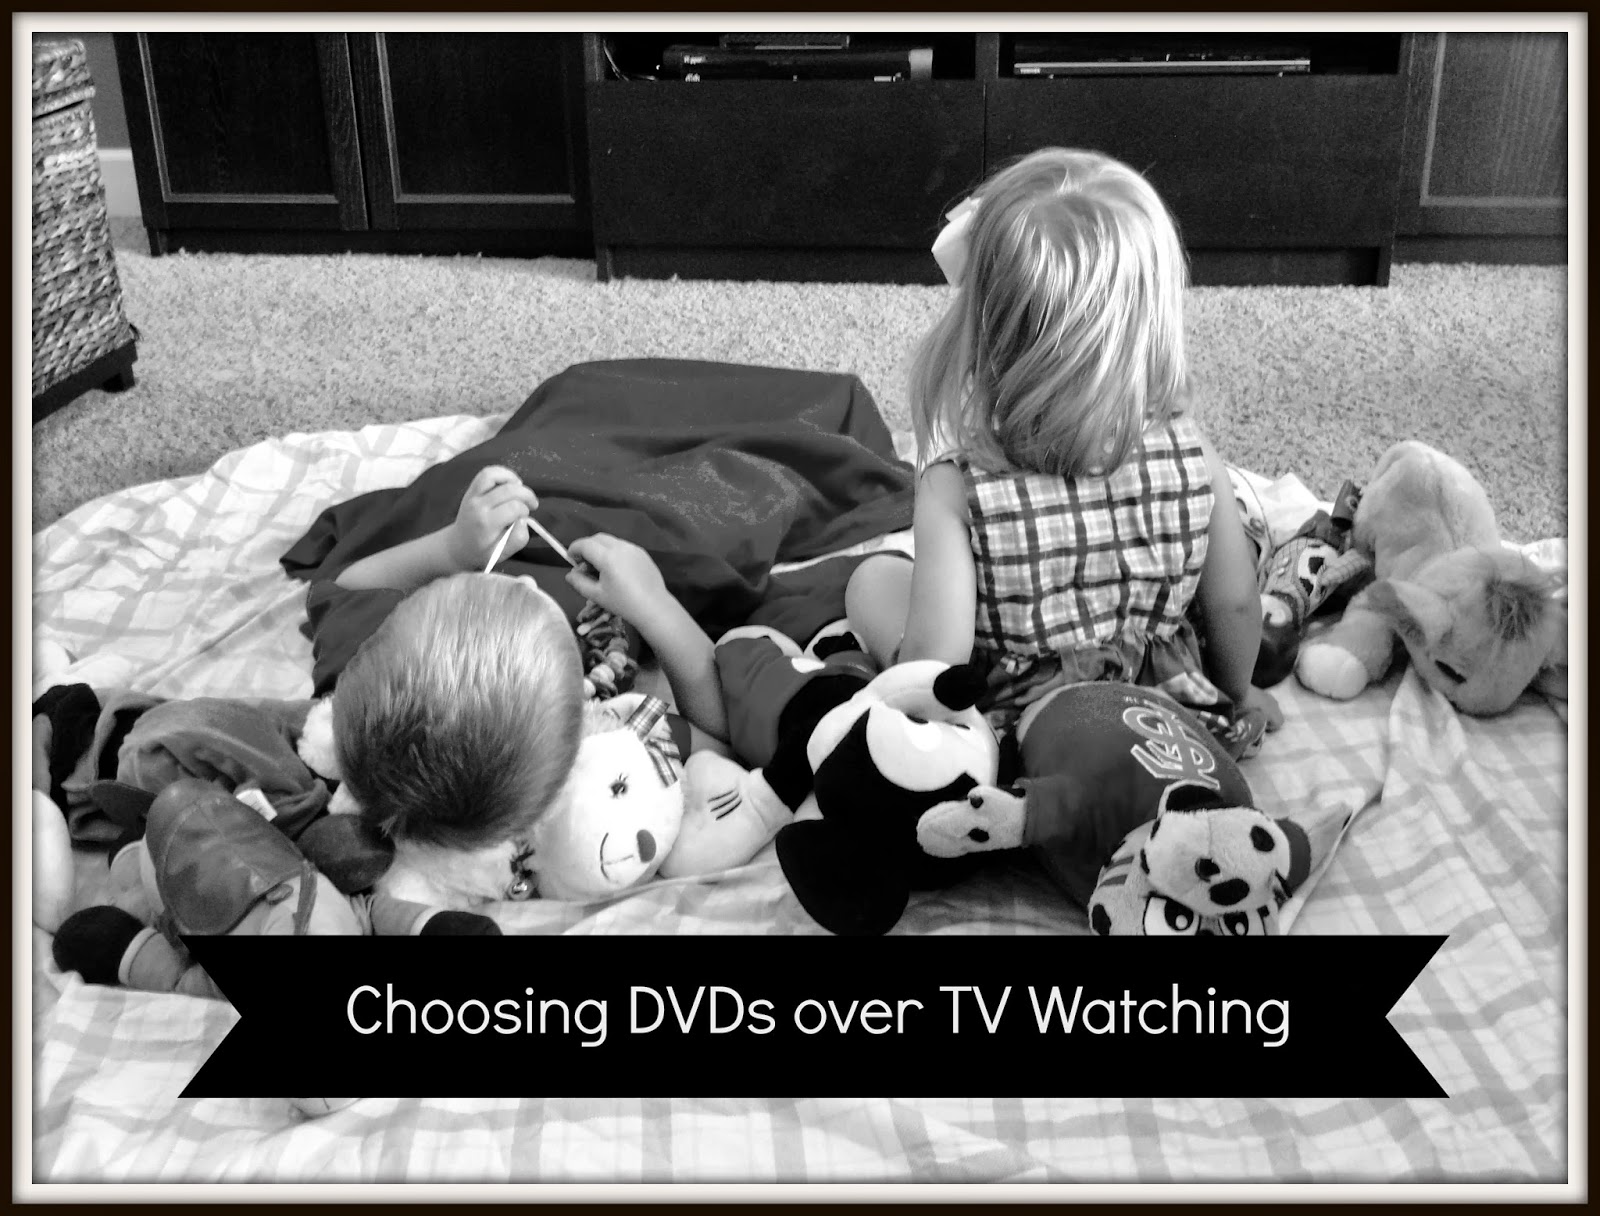 DVDS over TV